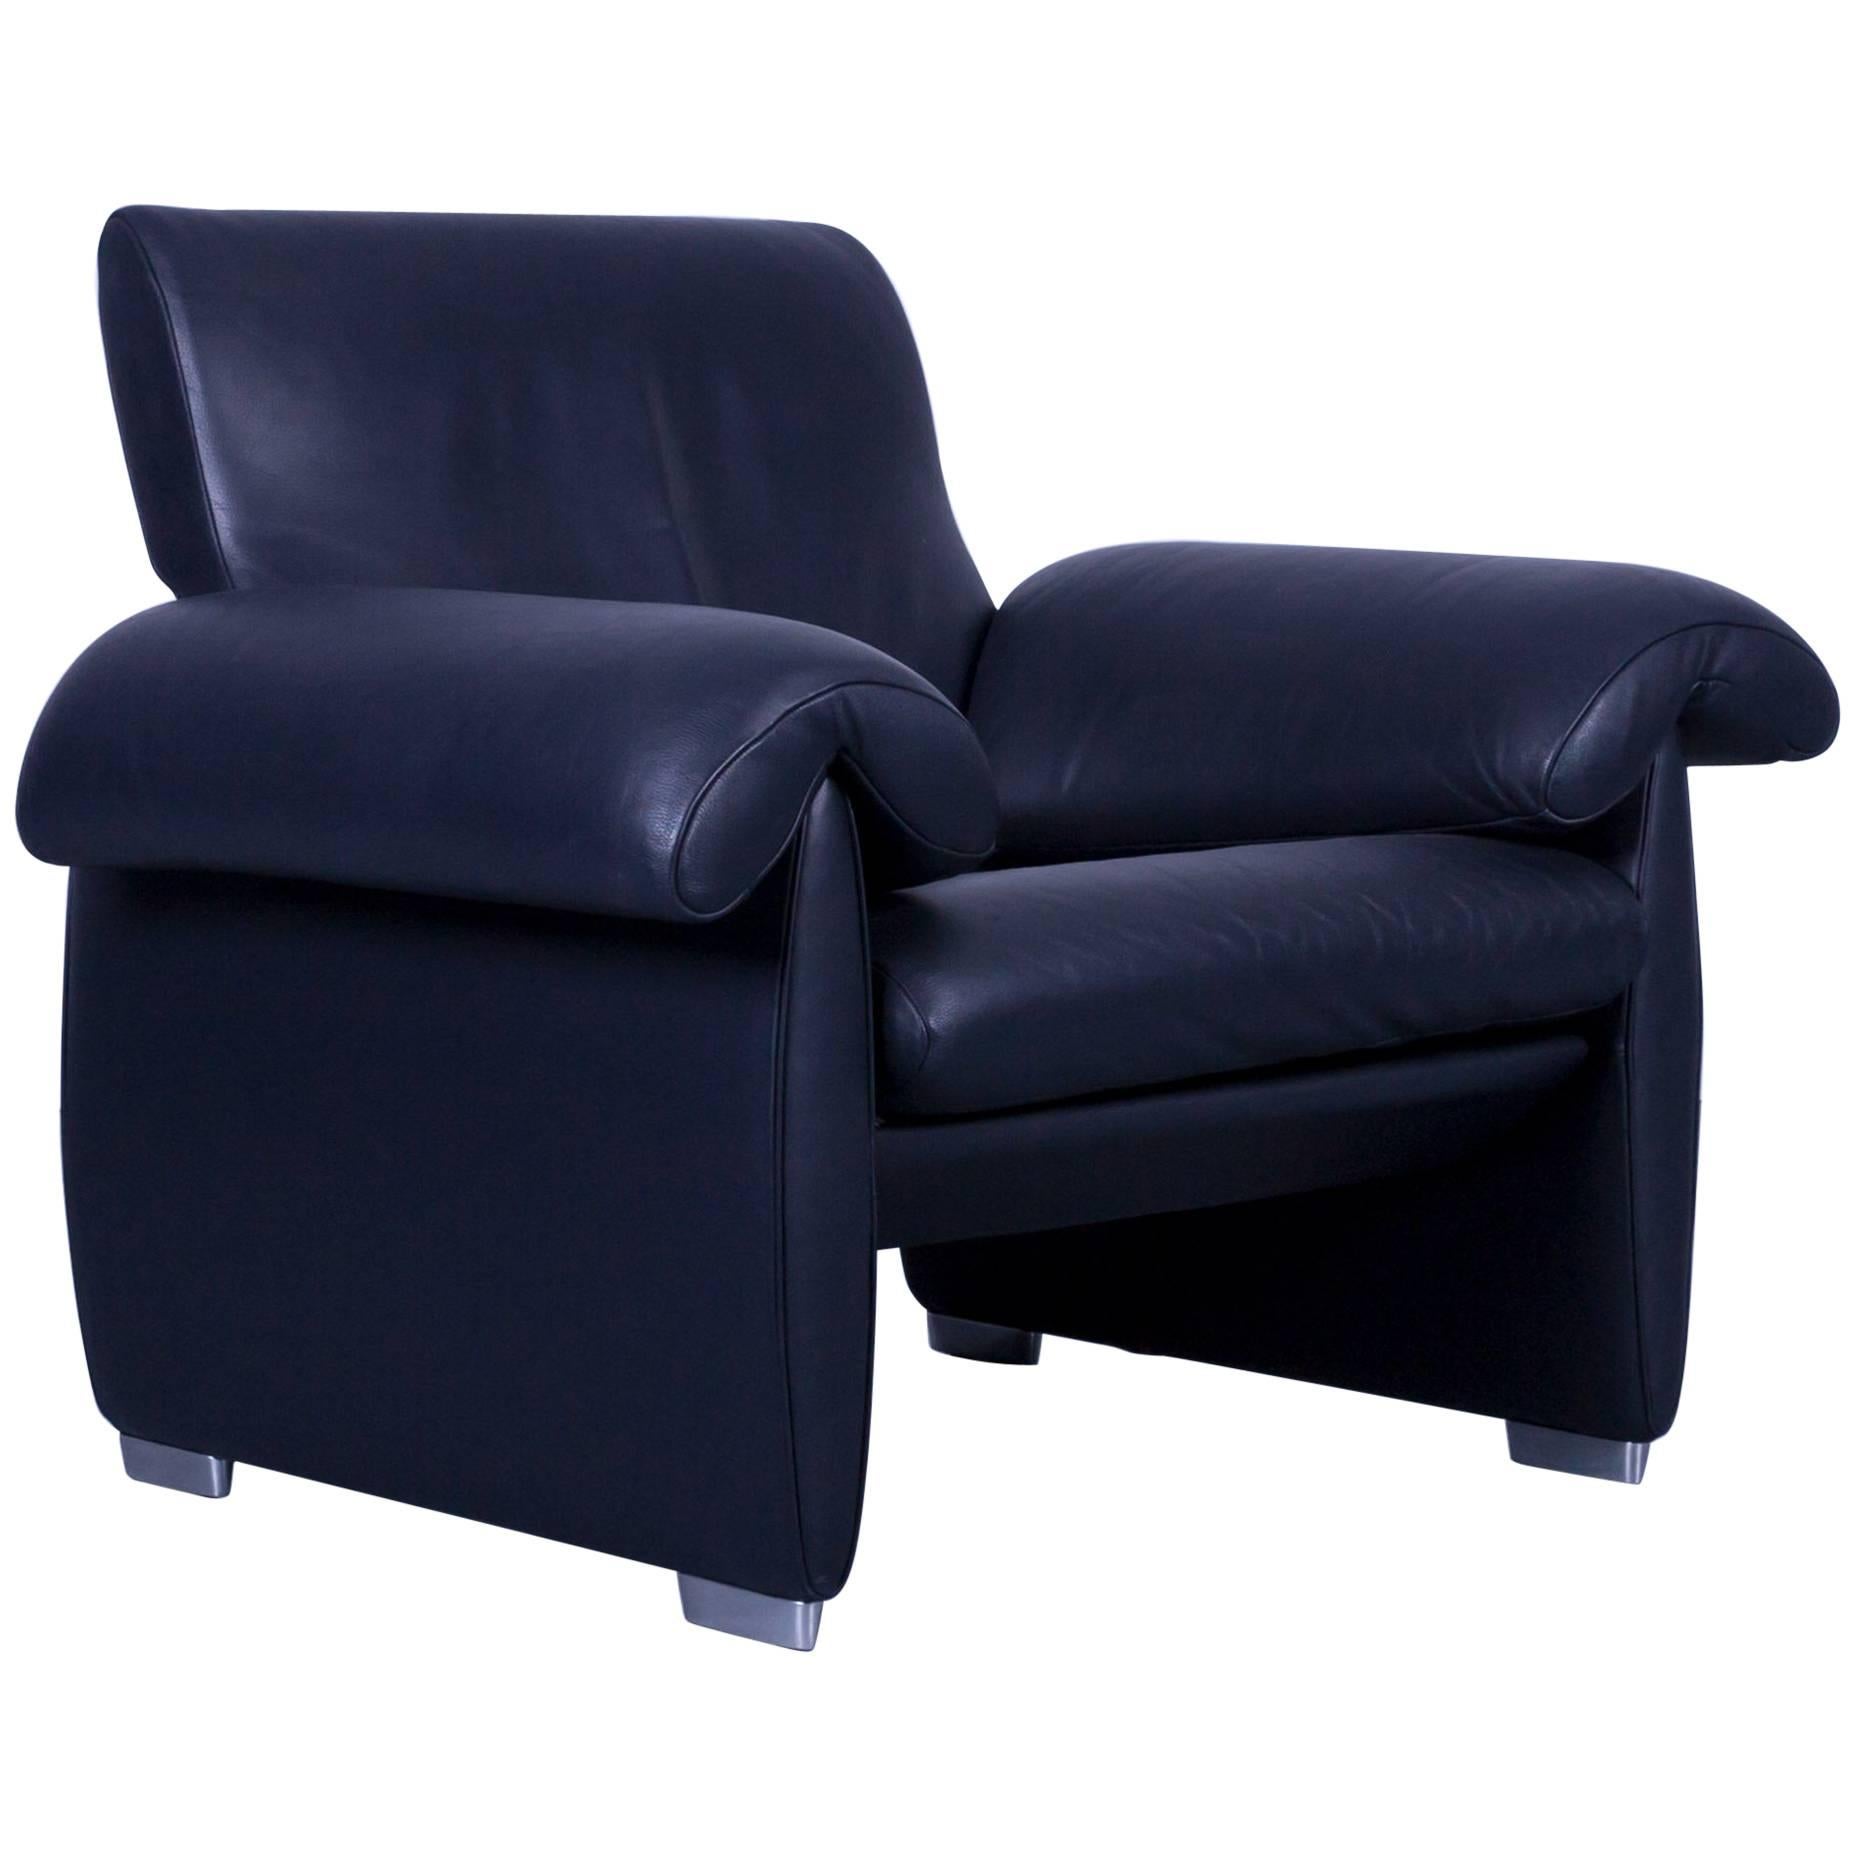 de Sede DS 10 Designer Leather Armchair Dark Navy Blue One-Seat from Switzerland